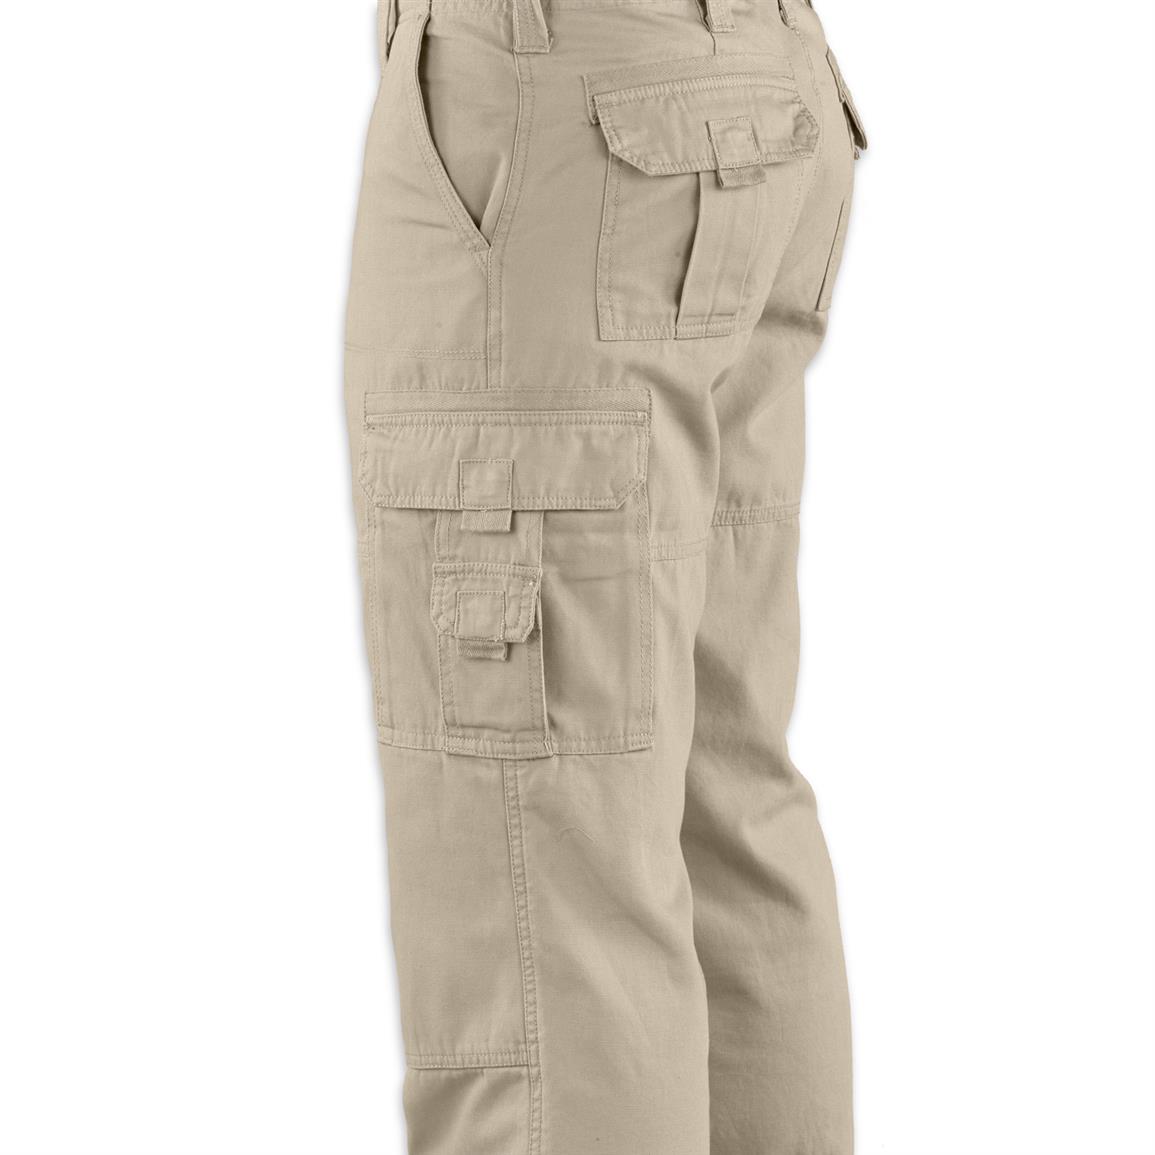 Guide Gear Men's Cargo Pants - 224167, Jeans & Pants at Sportsman's Guide